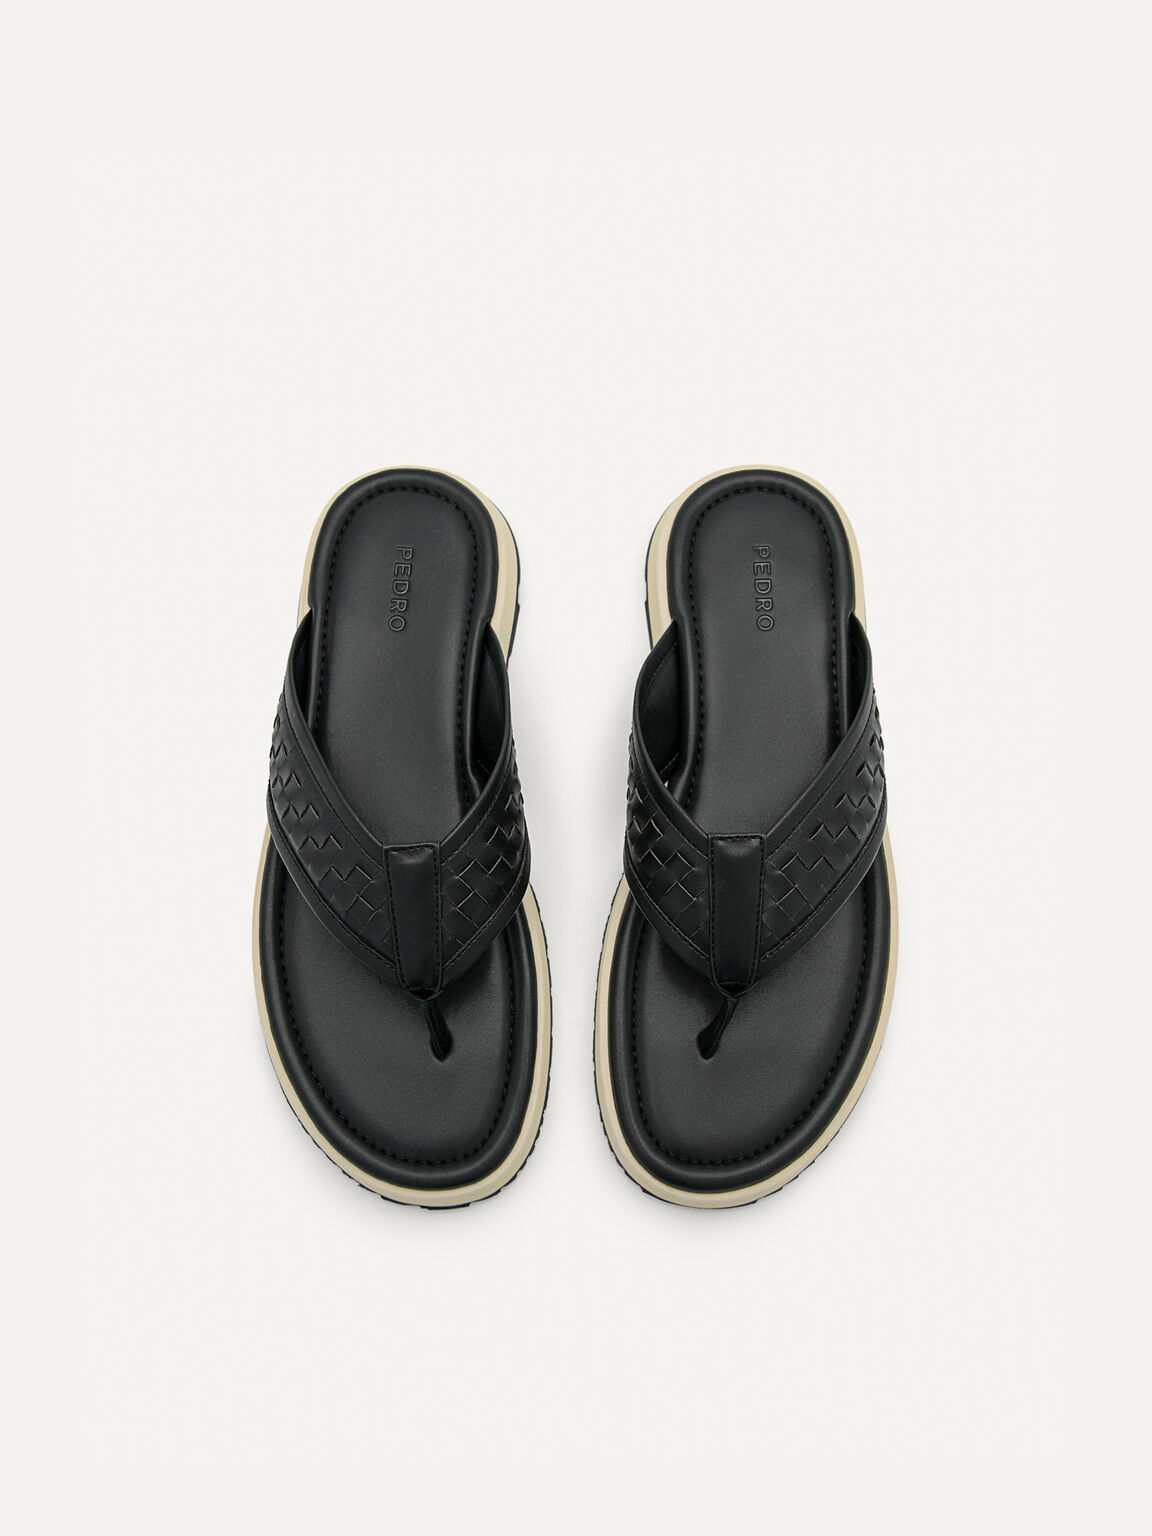 Woven Thong Sandals, Black